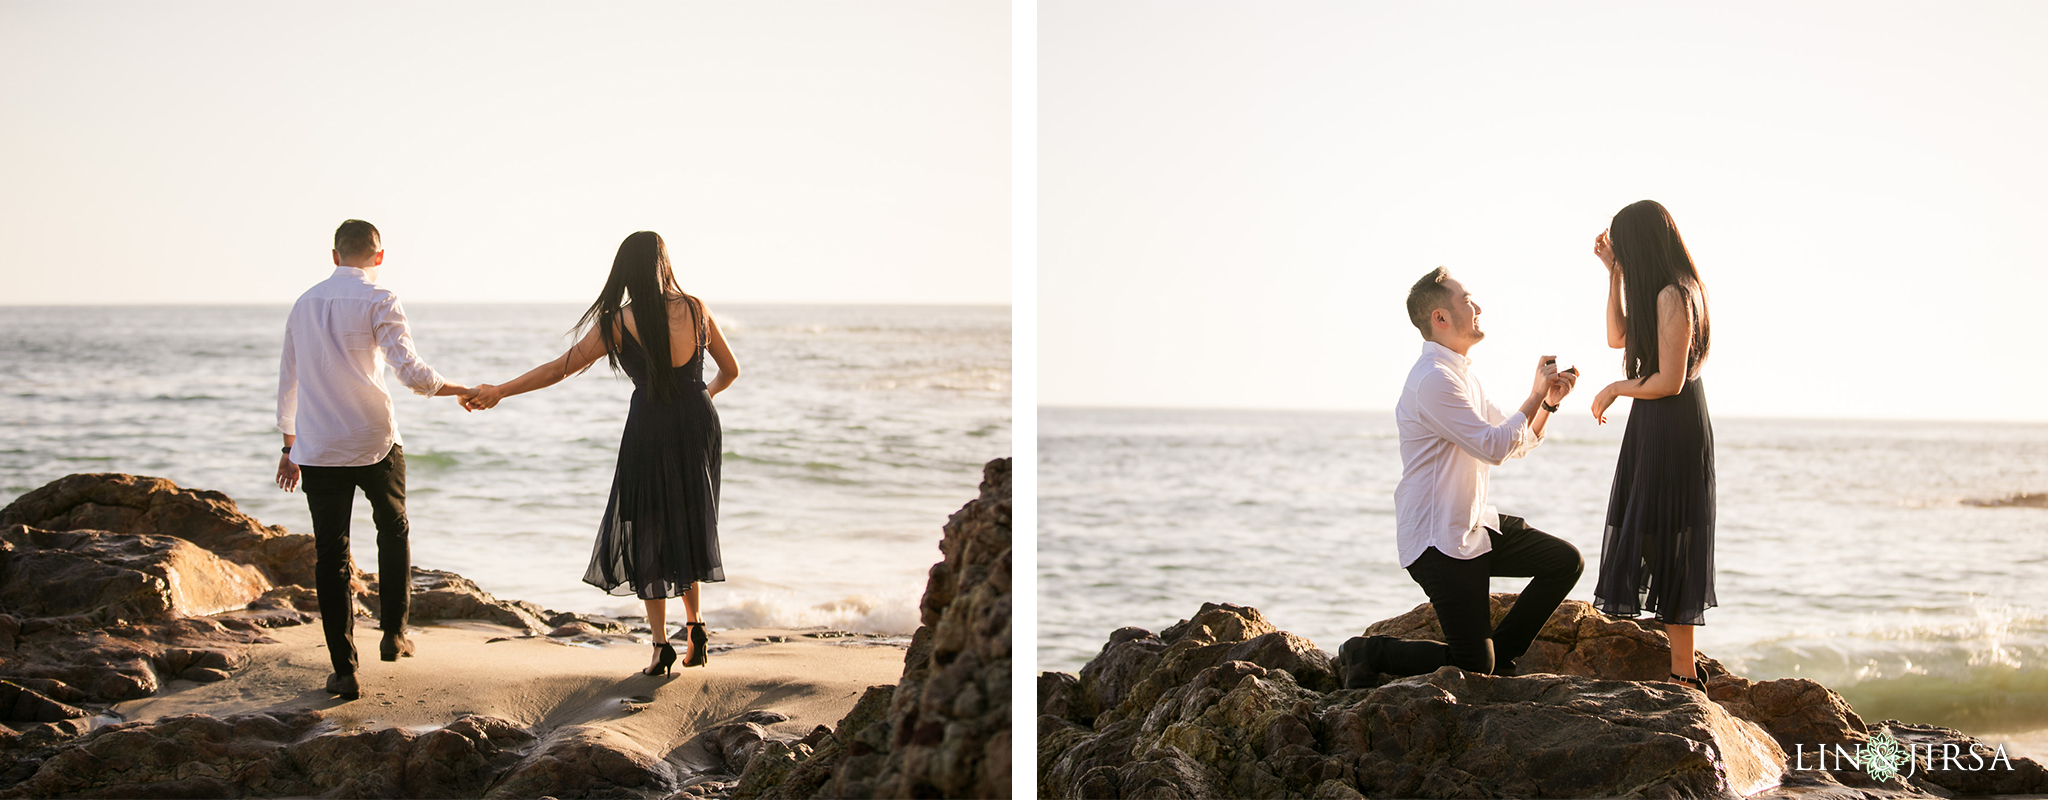 znc Heisler Beach Orange County Proposal Engagement Photography